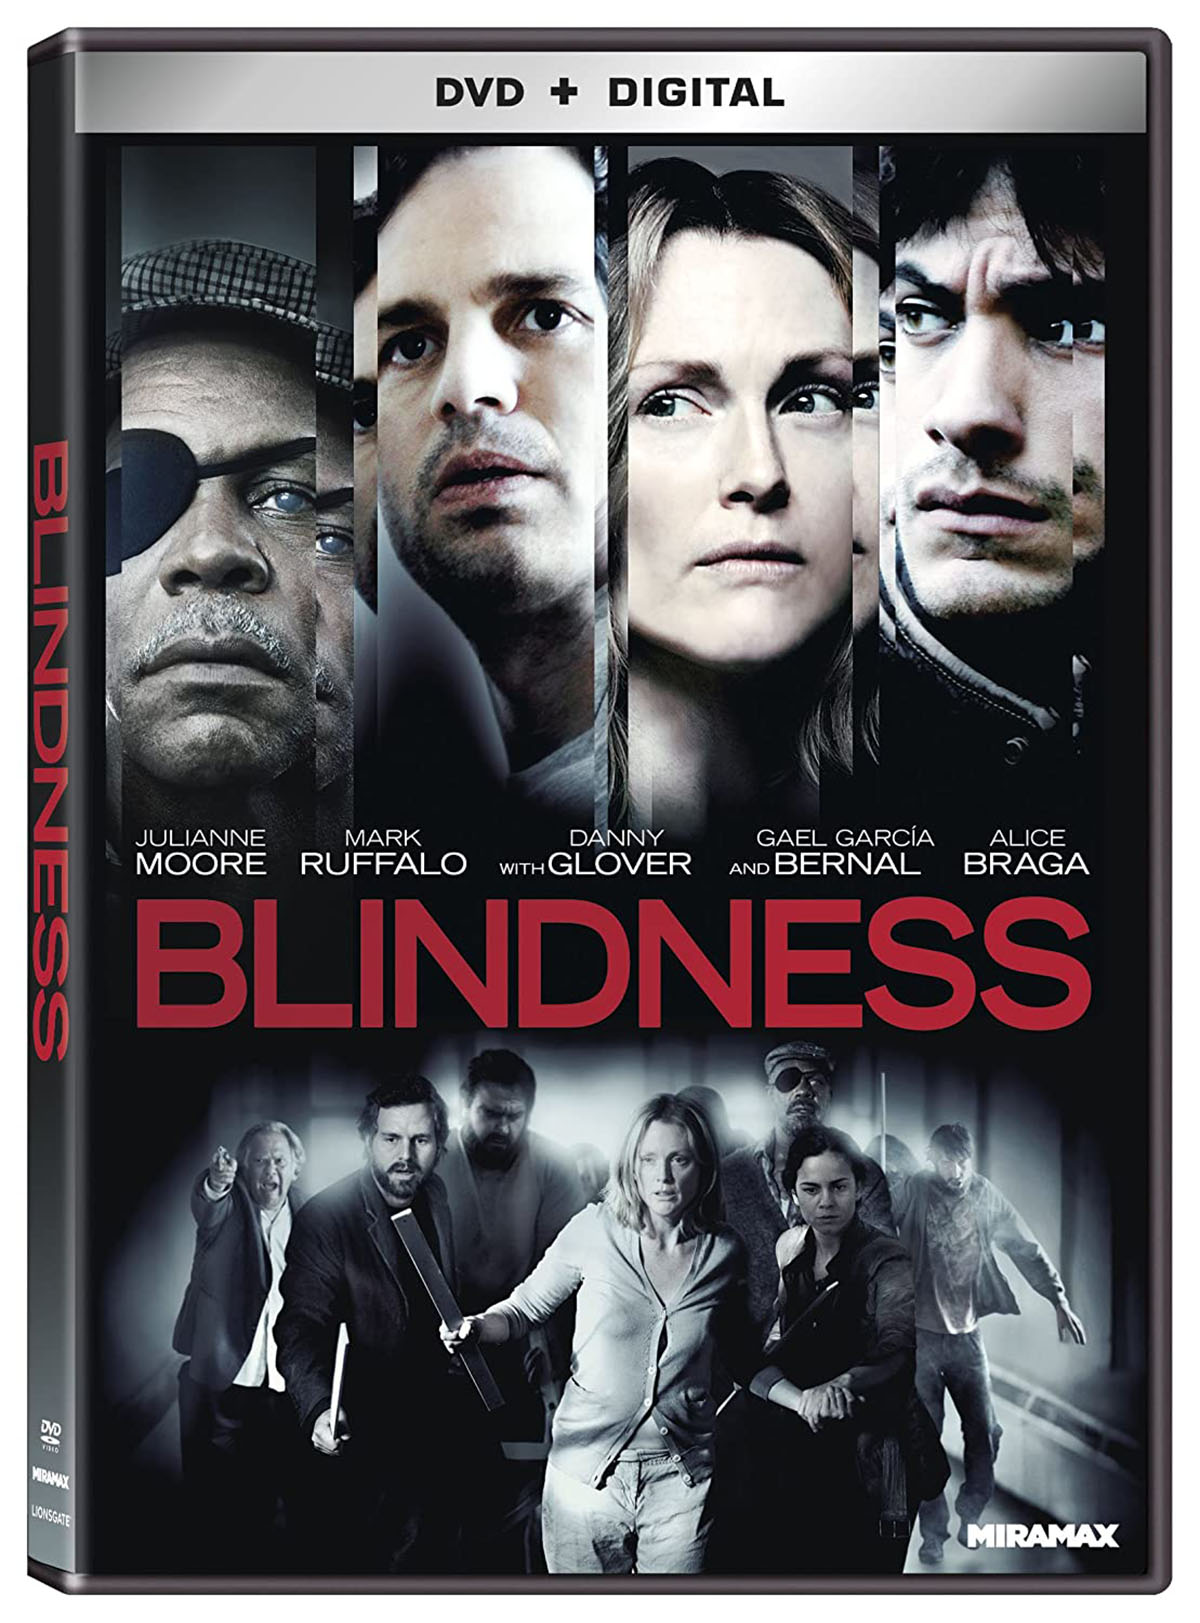 barbara eisenman recommends blindness movie rape scene pic